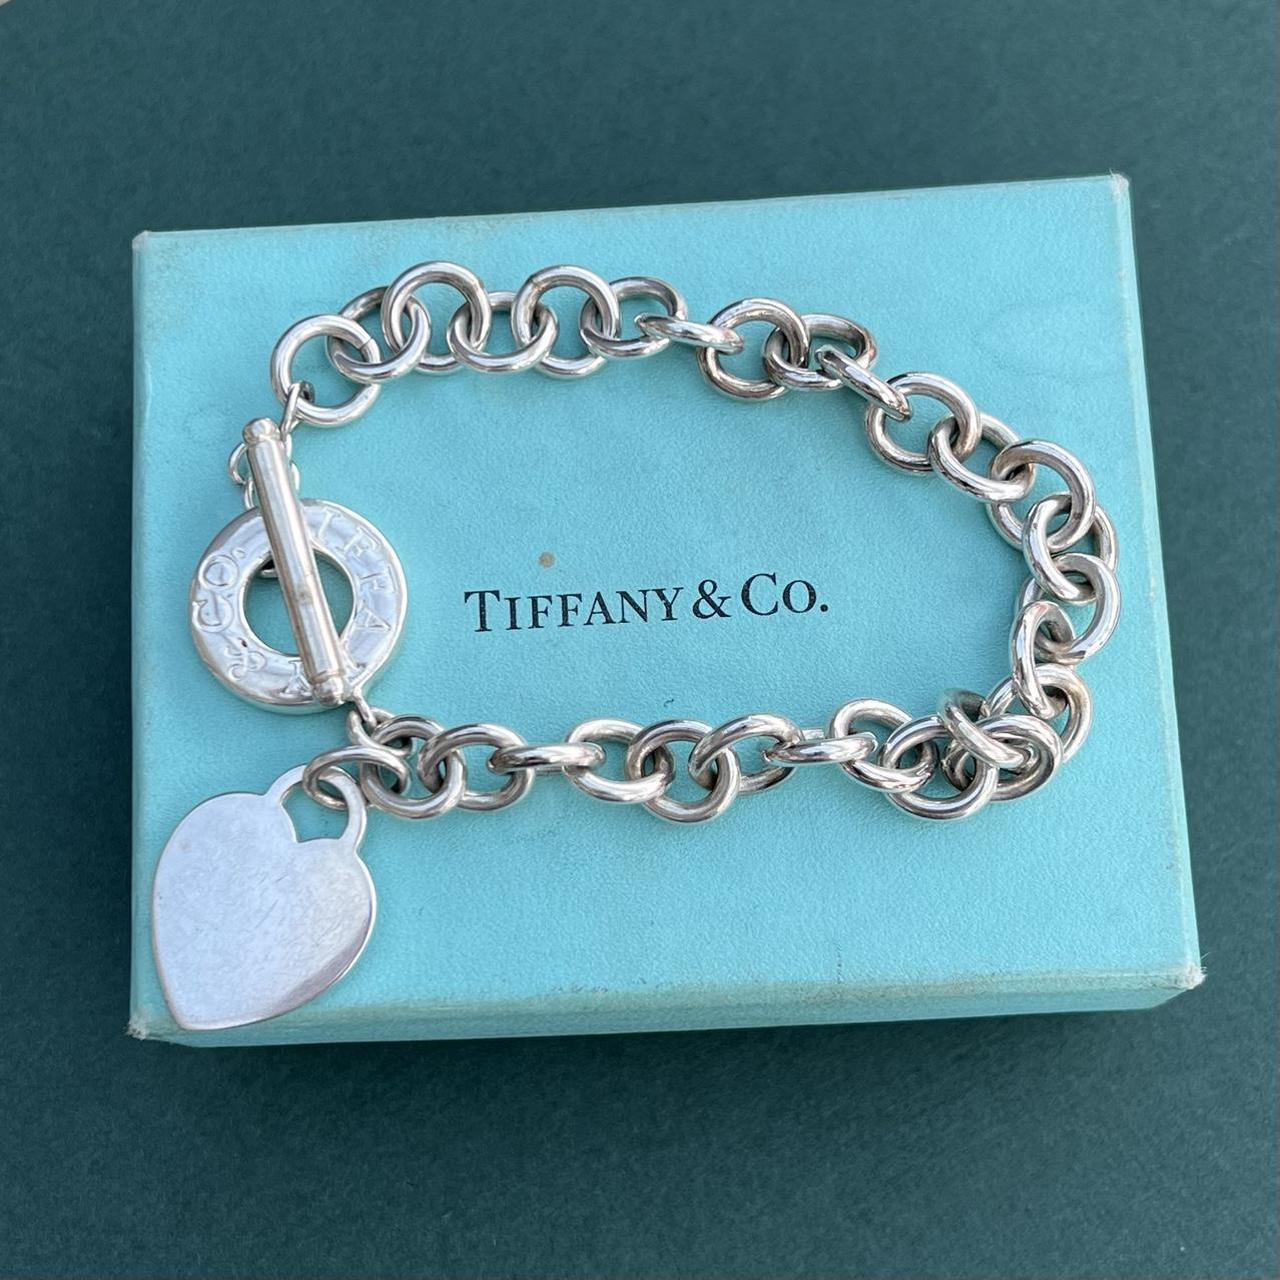 Tiffany & Co Bracelet Purchased off Vinted last... - Depop